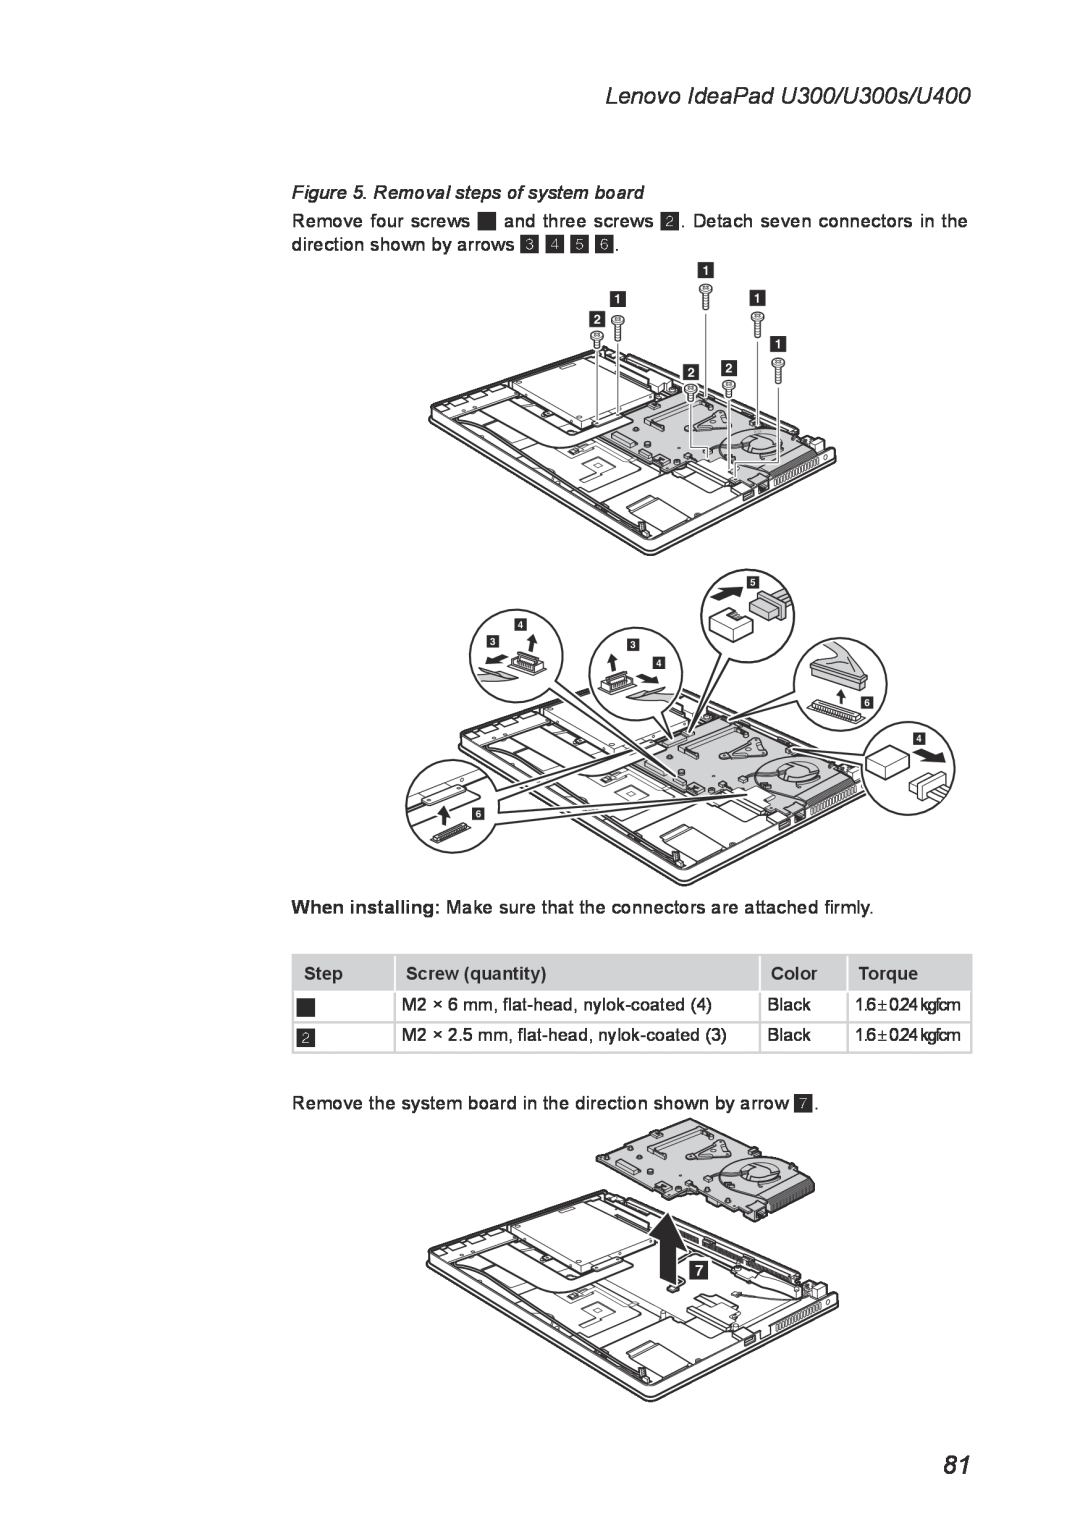 Lenovo U300S manual Removal steps of system board, Lenovo IdeaPad U300/U300s/U400 